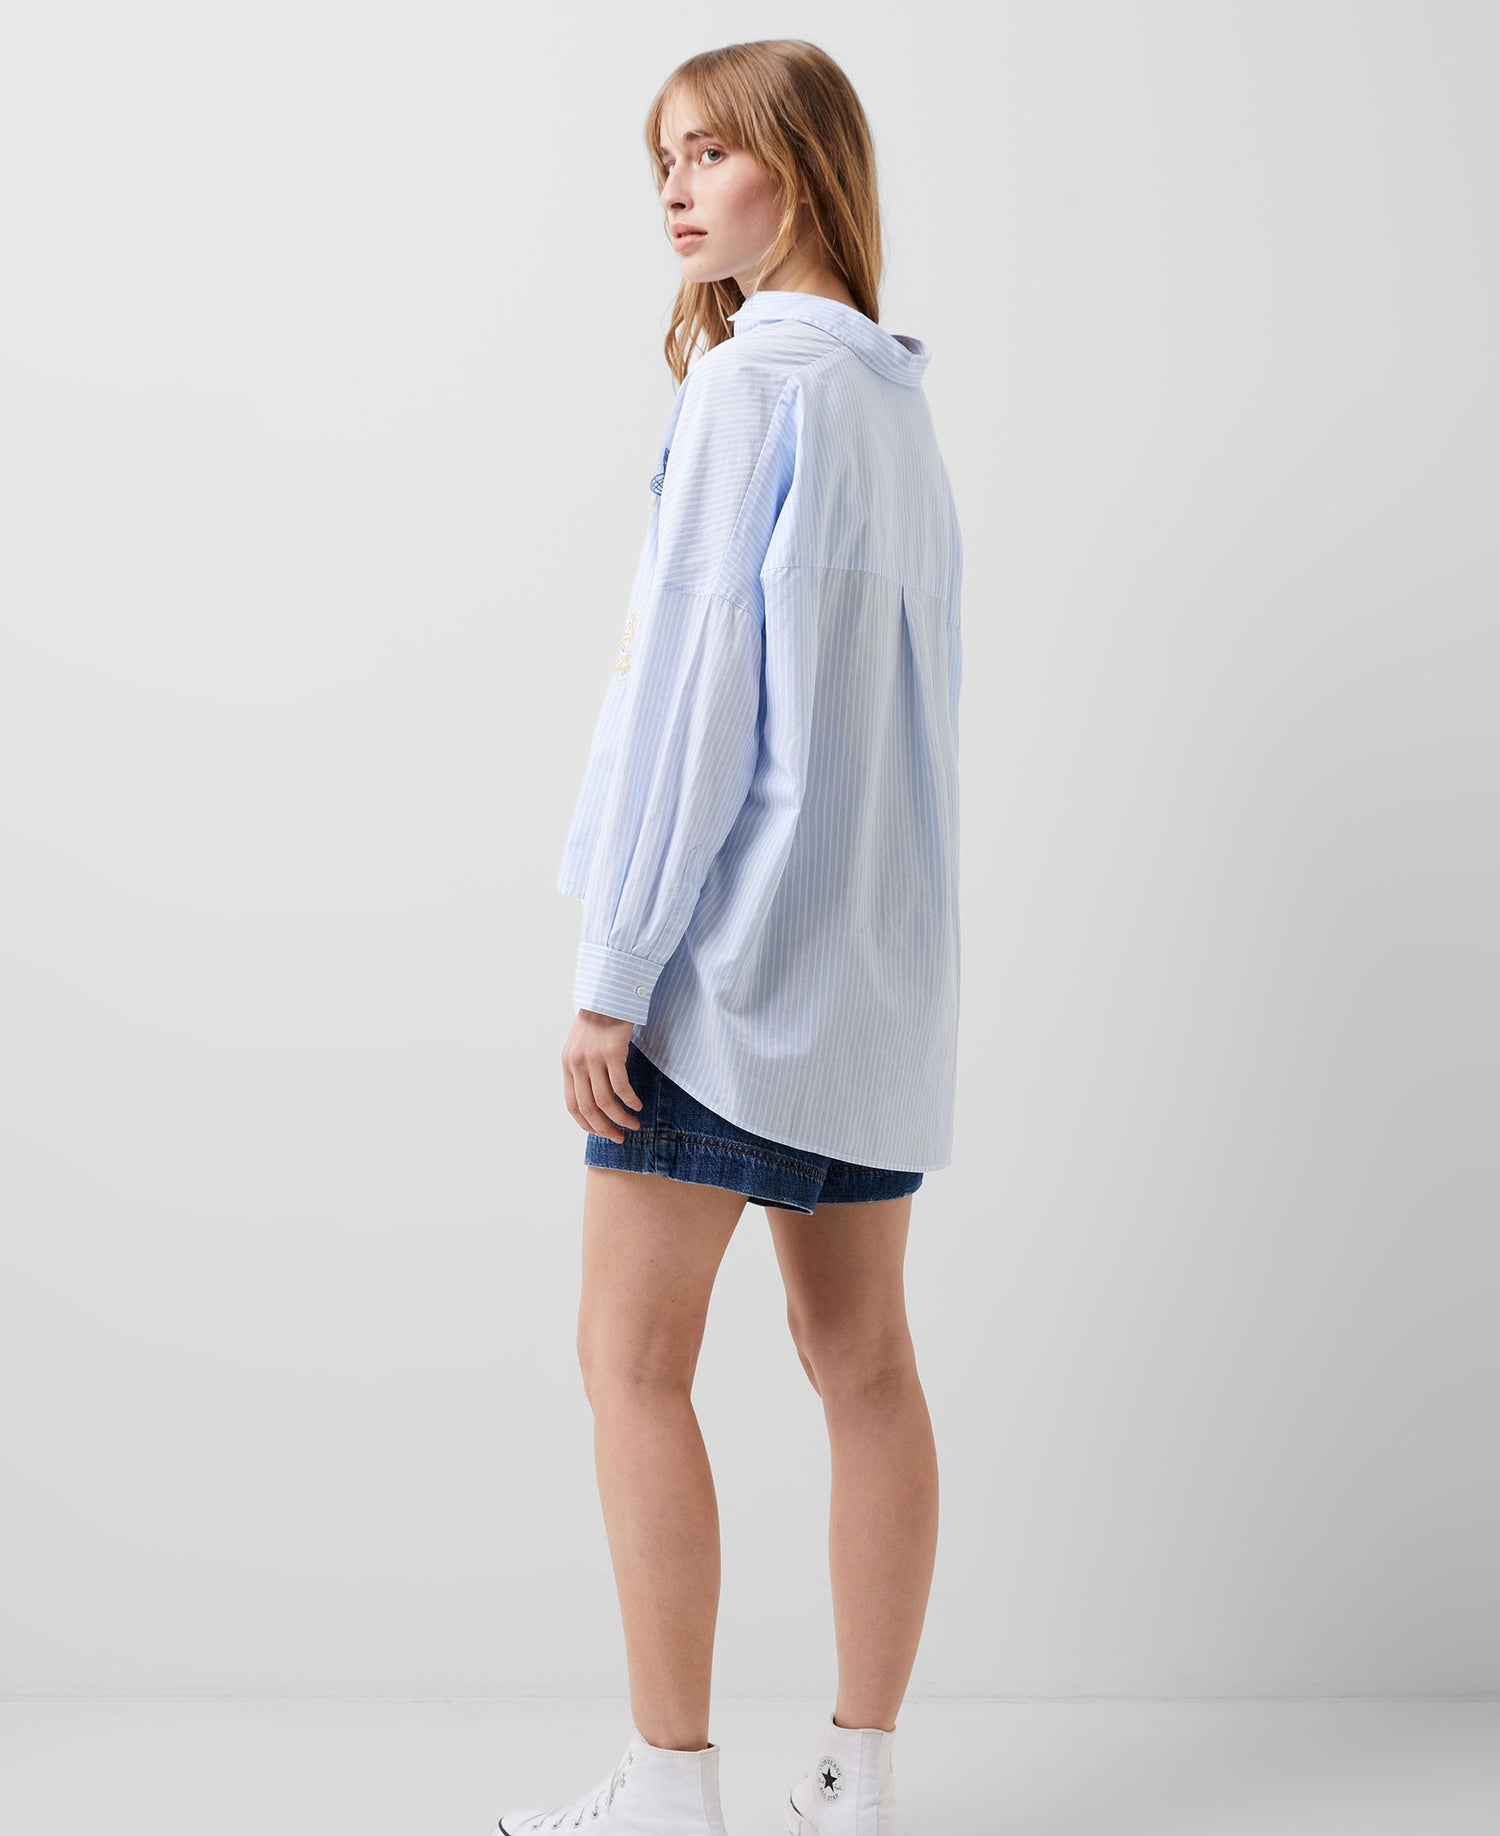 Rhodes Poplin Shirt - Linen White/Blue